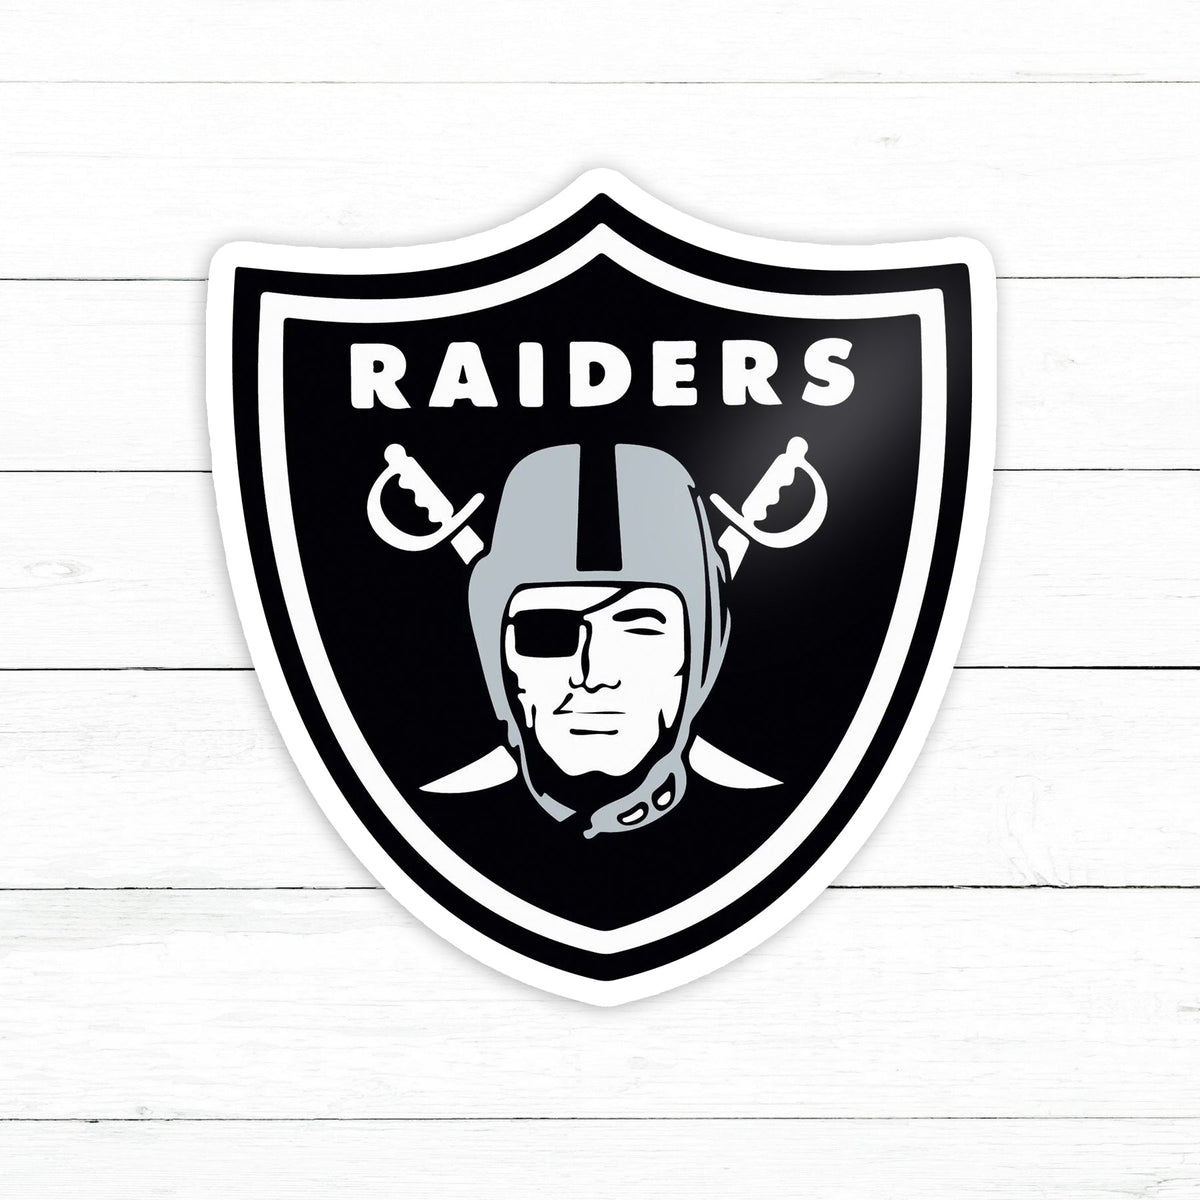 Las Vegas Raiders Helmet Decal Approx 4.5 x 3.5 inches